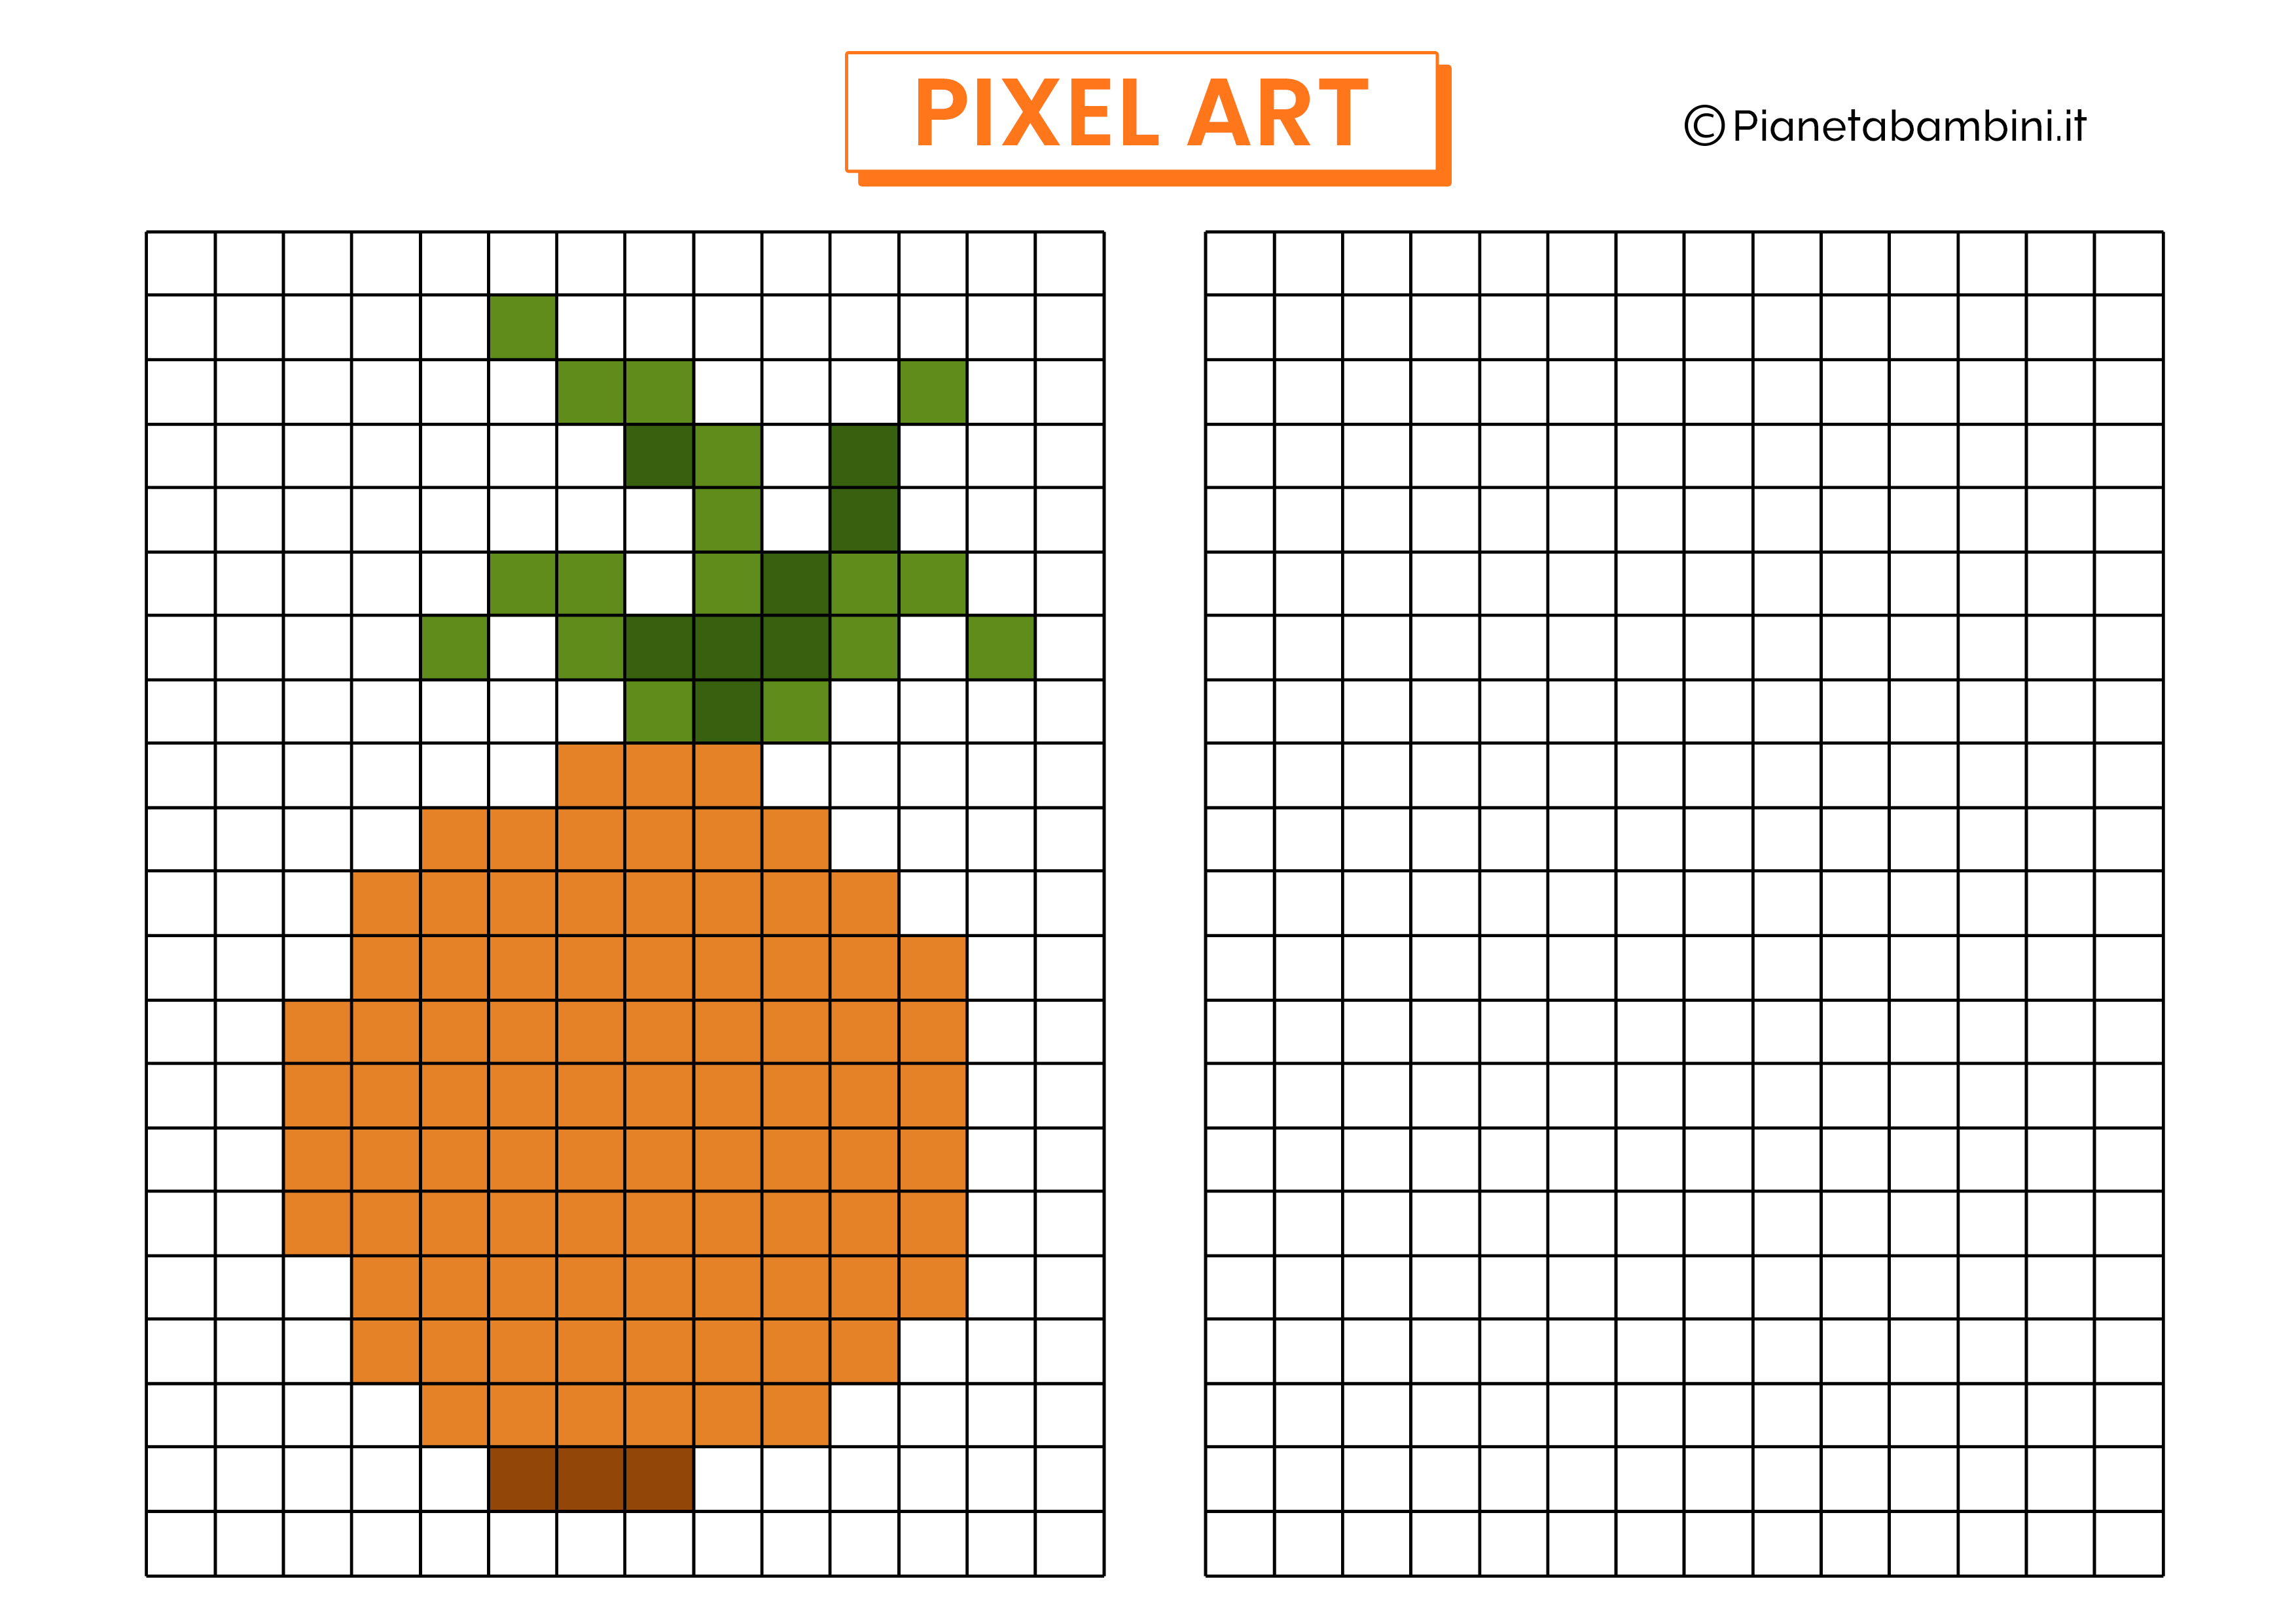 Pixel Art cipolla da copiare